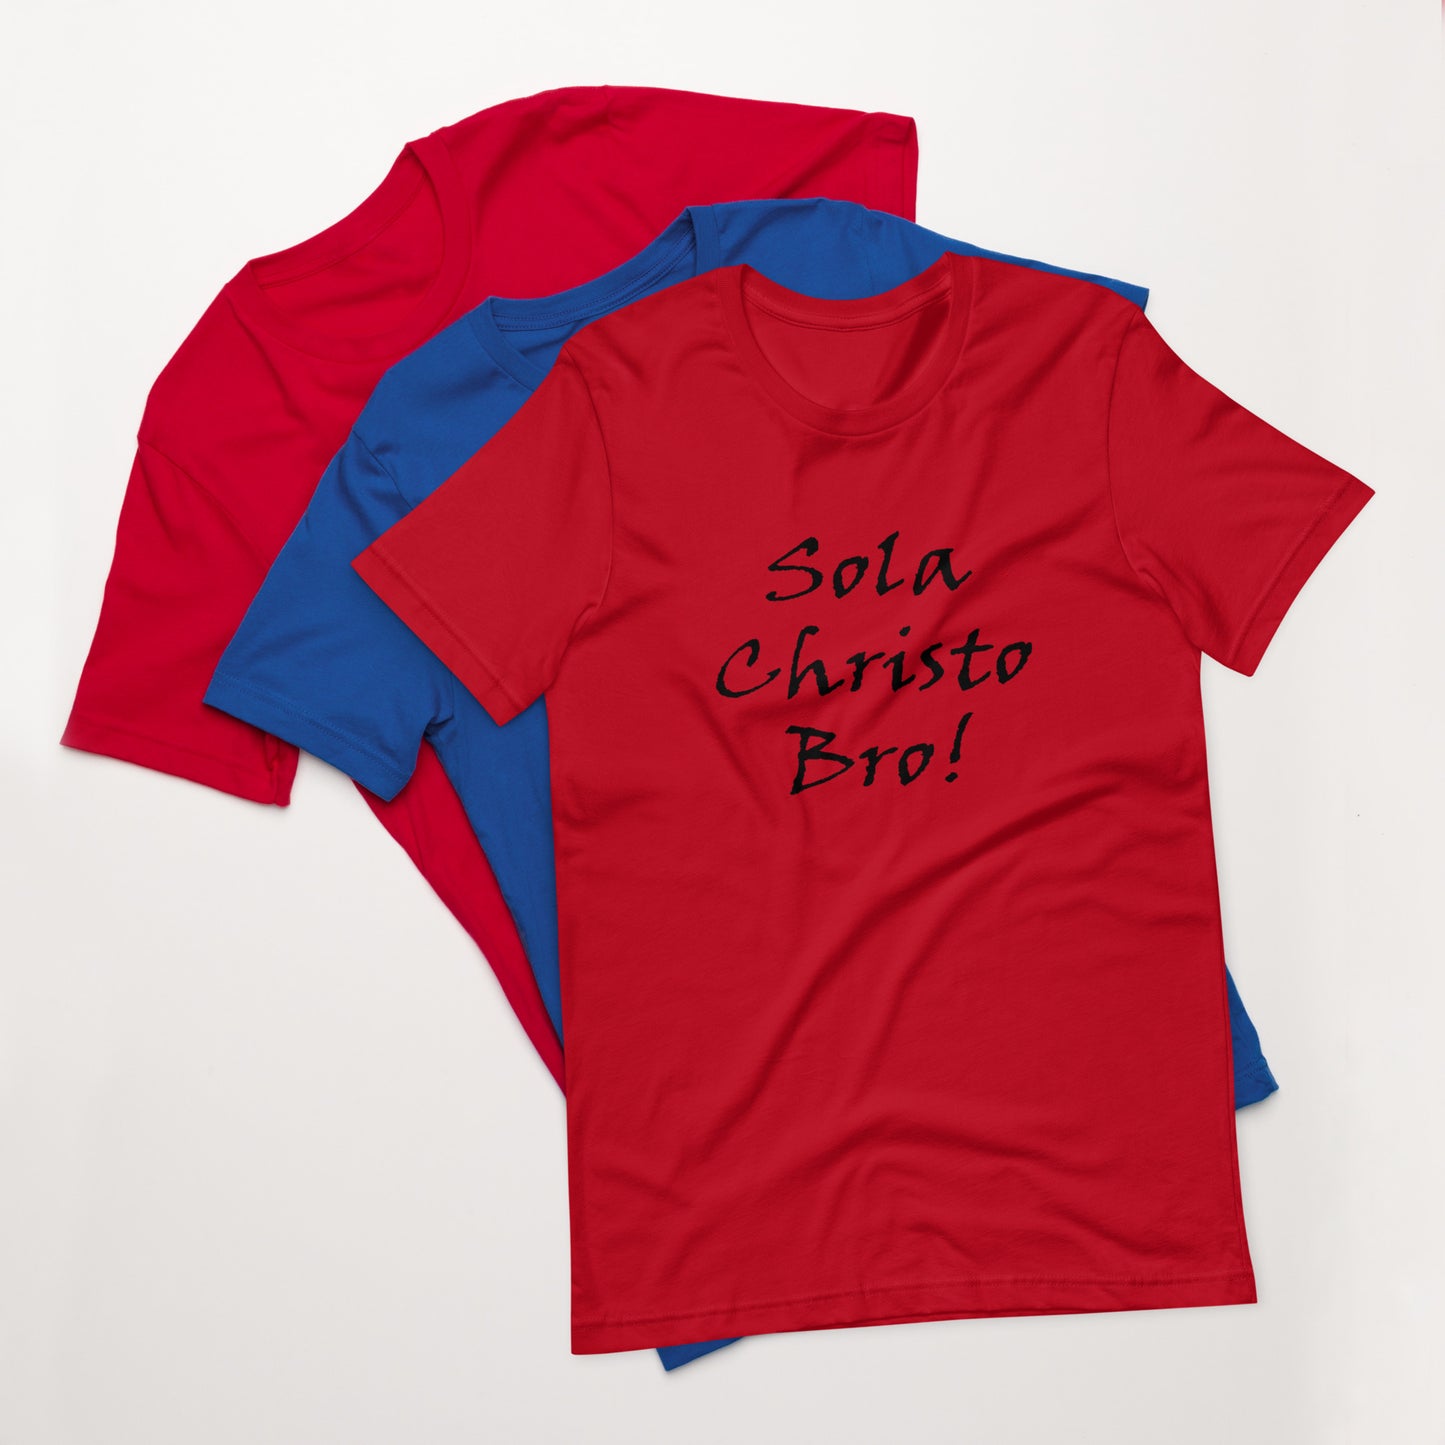 Sola Christo Bro! Unisex t-shirt - Solid Rock Designs | Christian Apparel